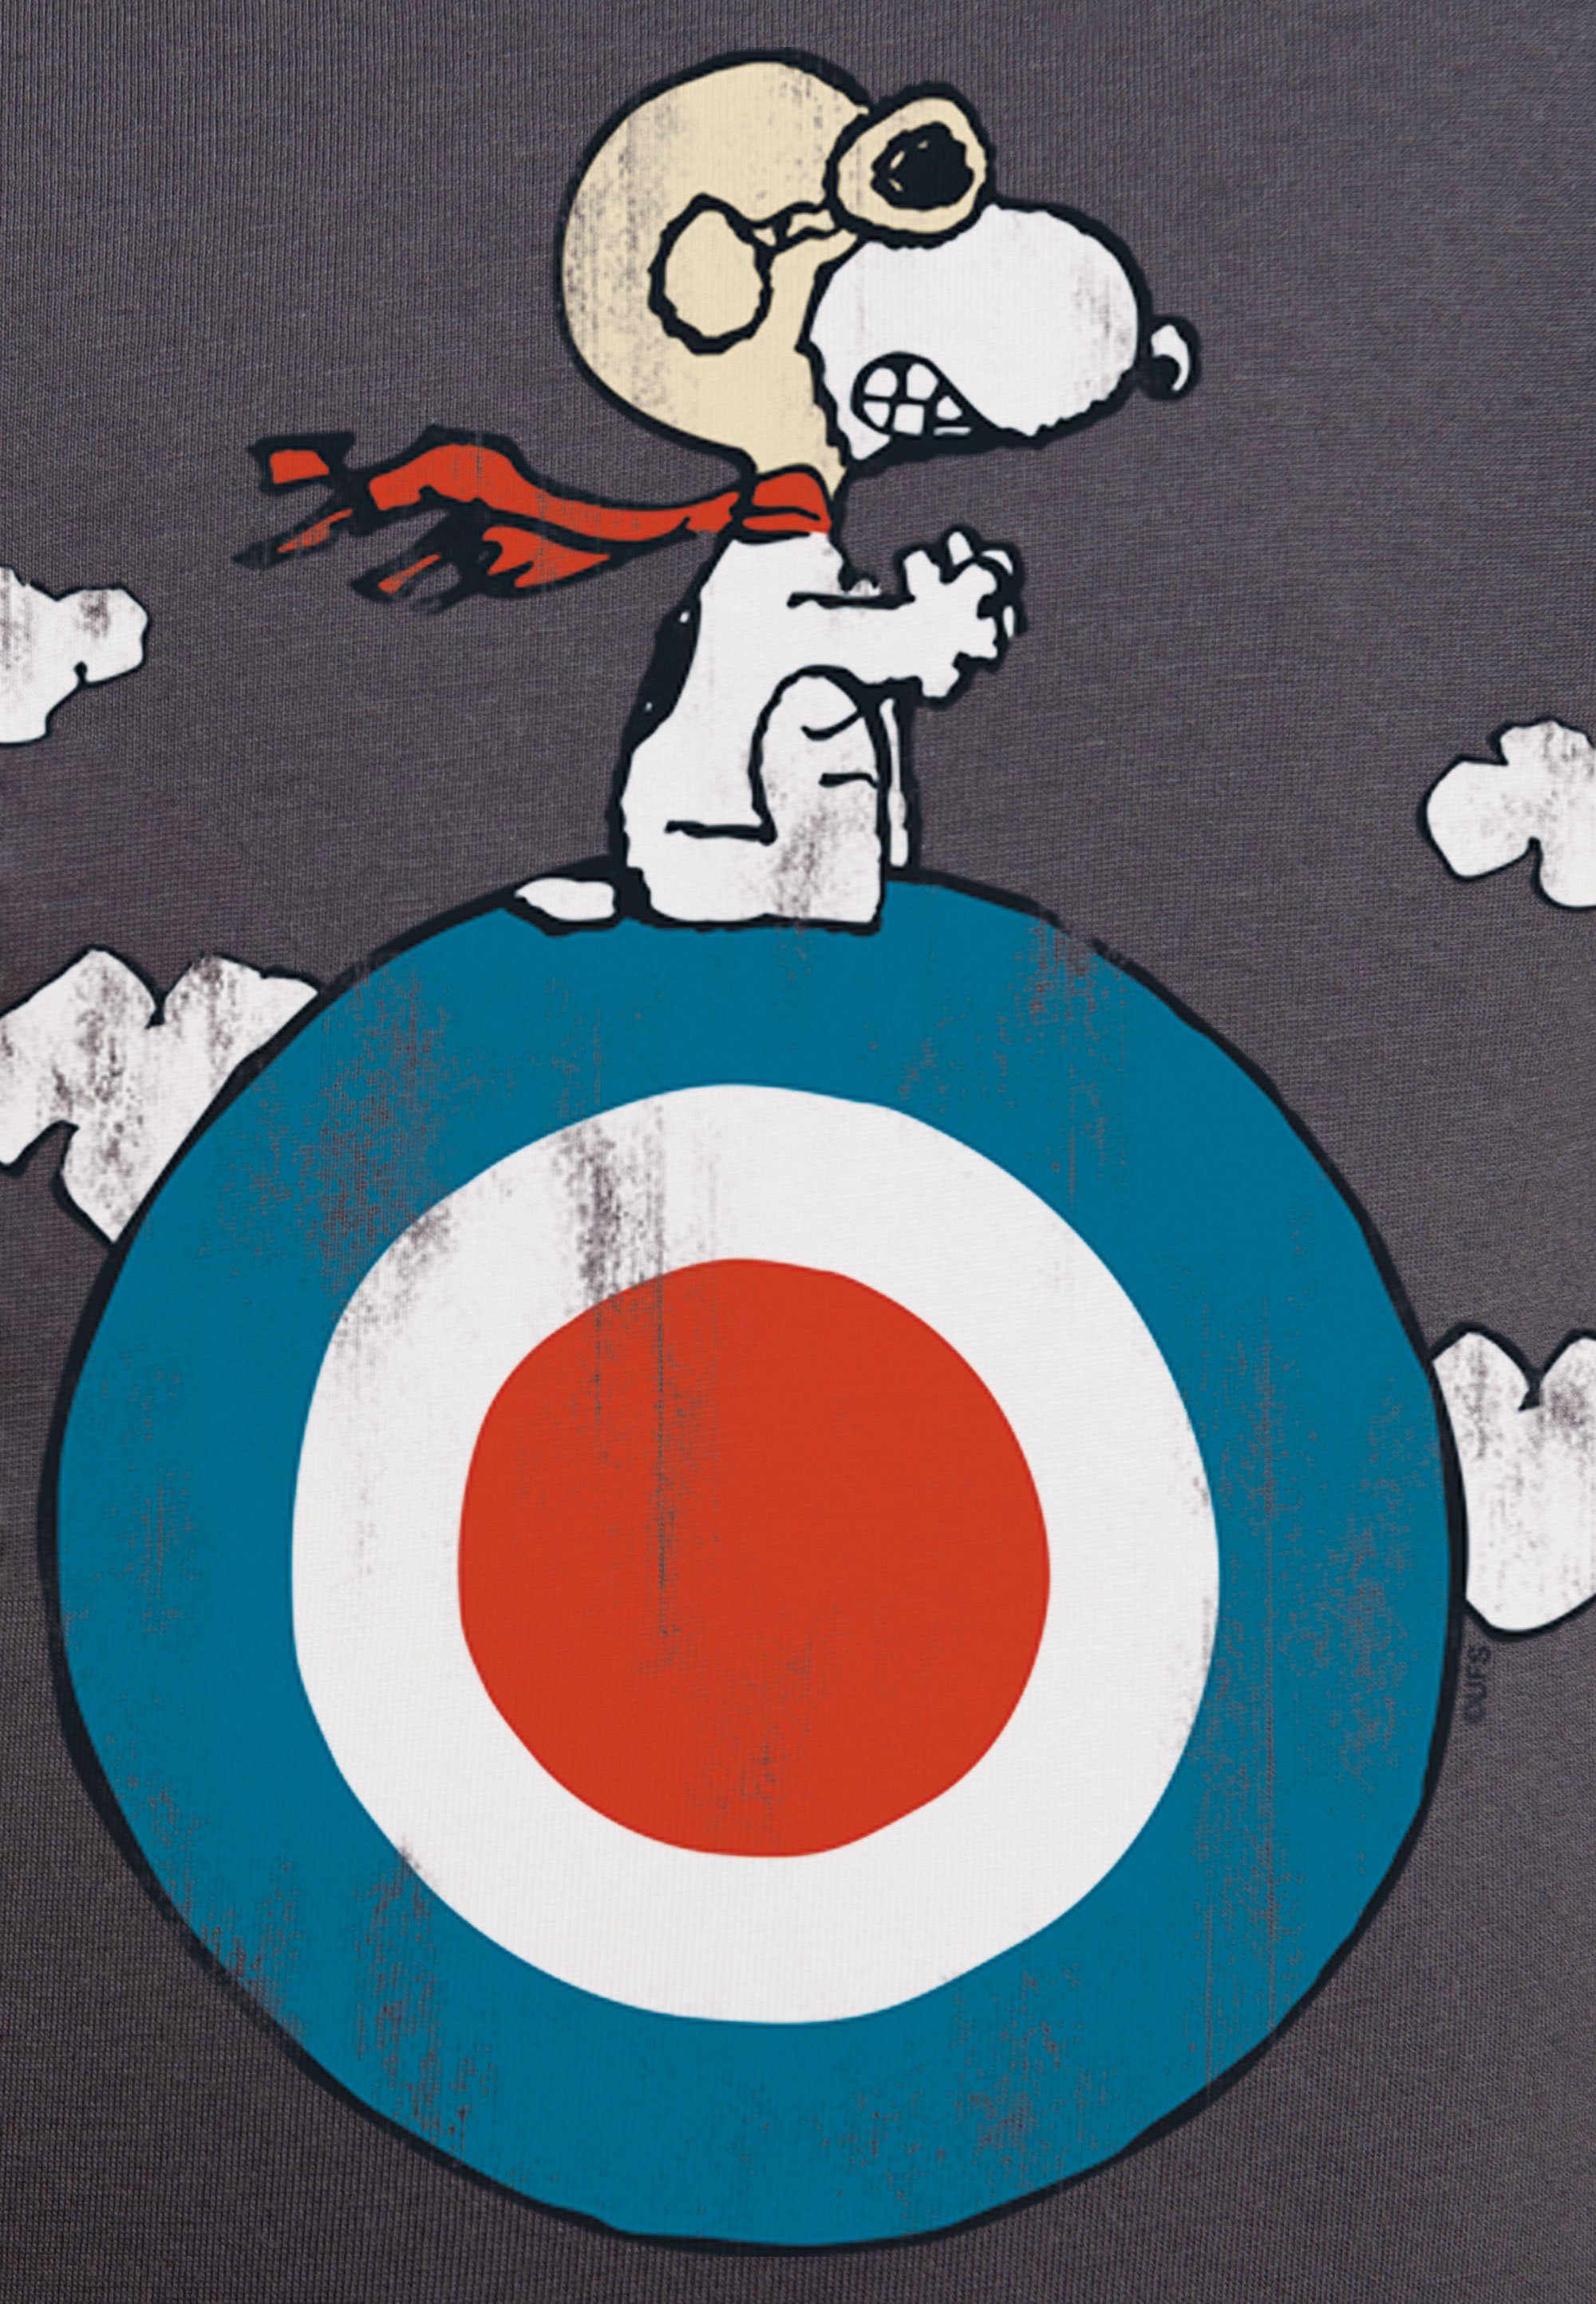 mit lizenziertem Print Peanuts LOGOSHIRT - Snoopy T-Shirt